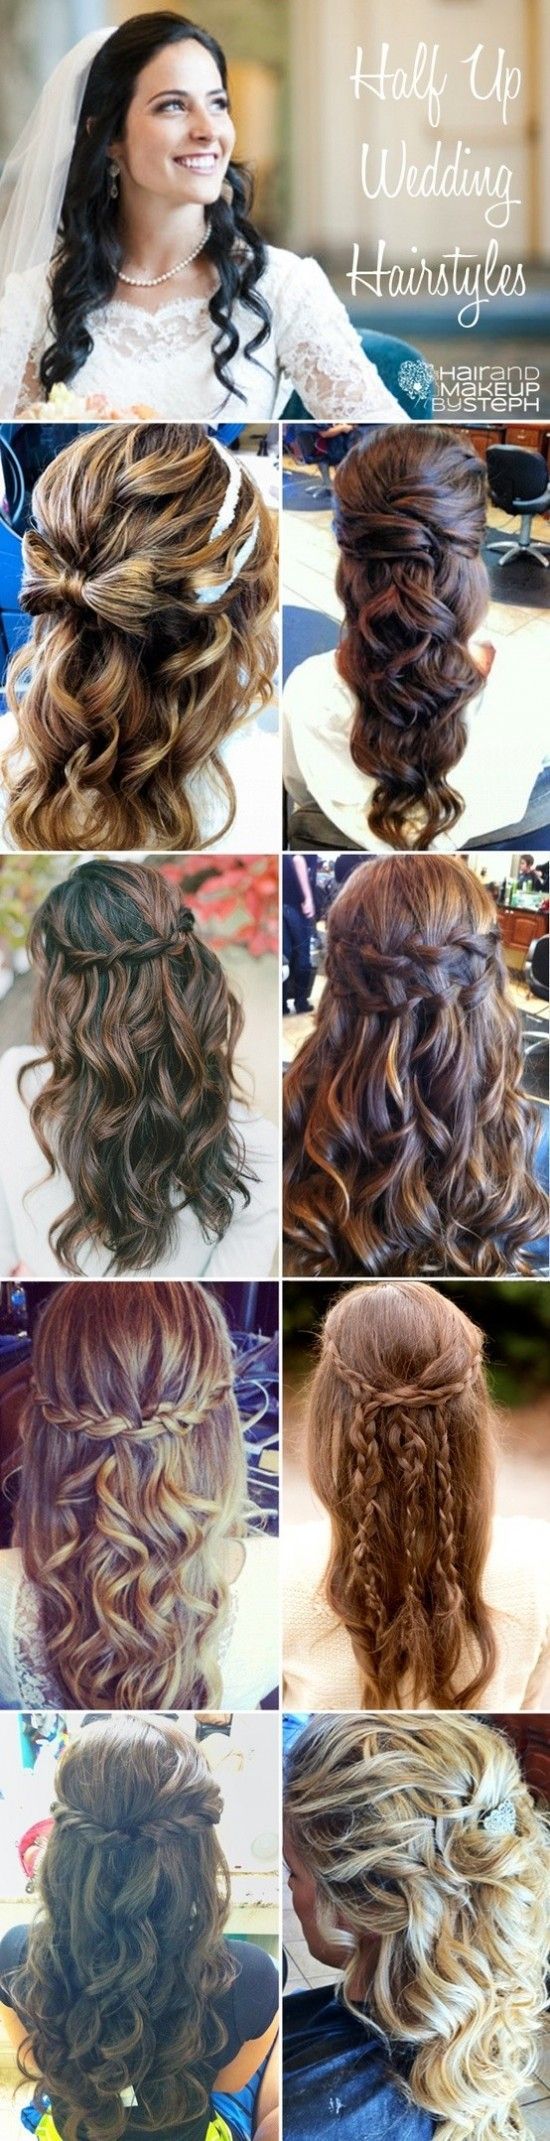 Tips For Wedding Hair Styles|Wedding Hair Style Long Hair For Girls|Fall Winter